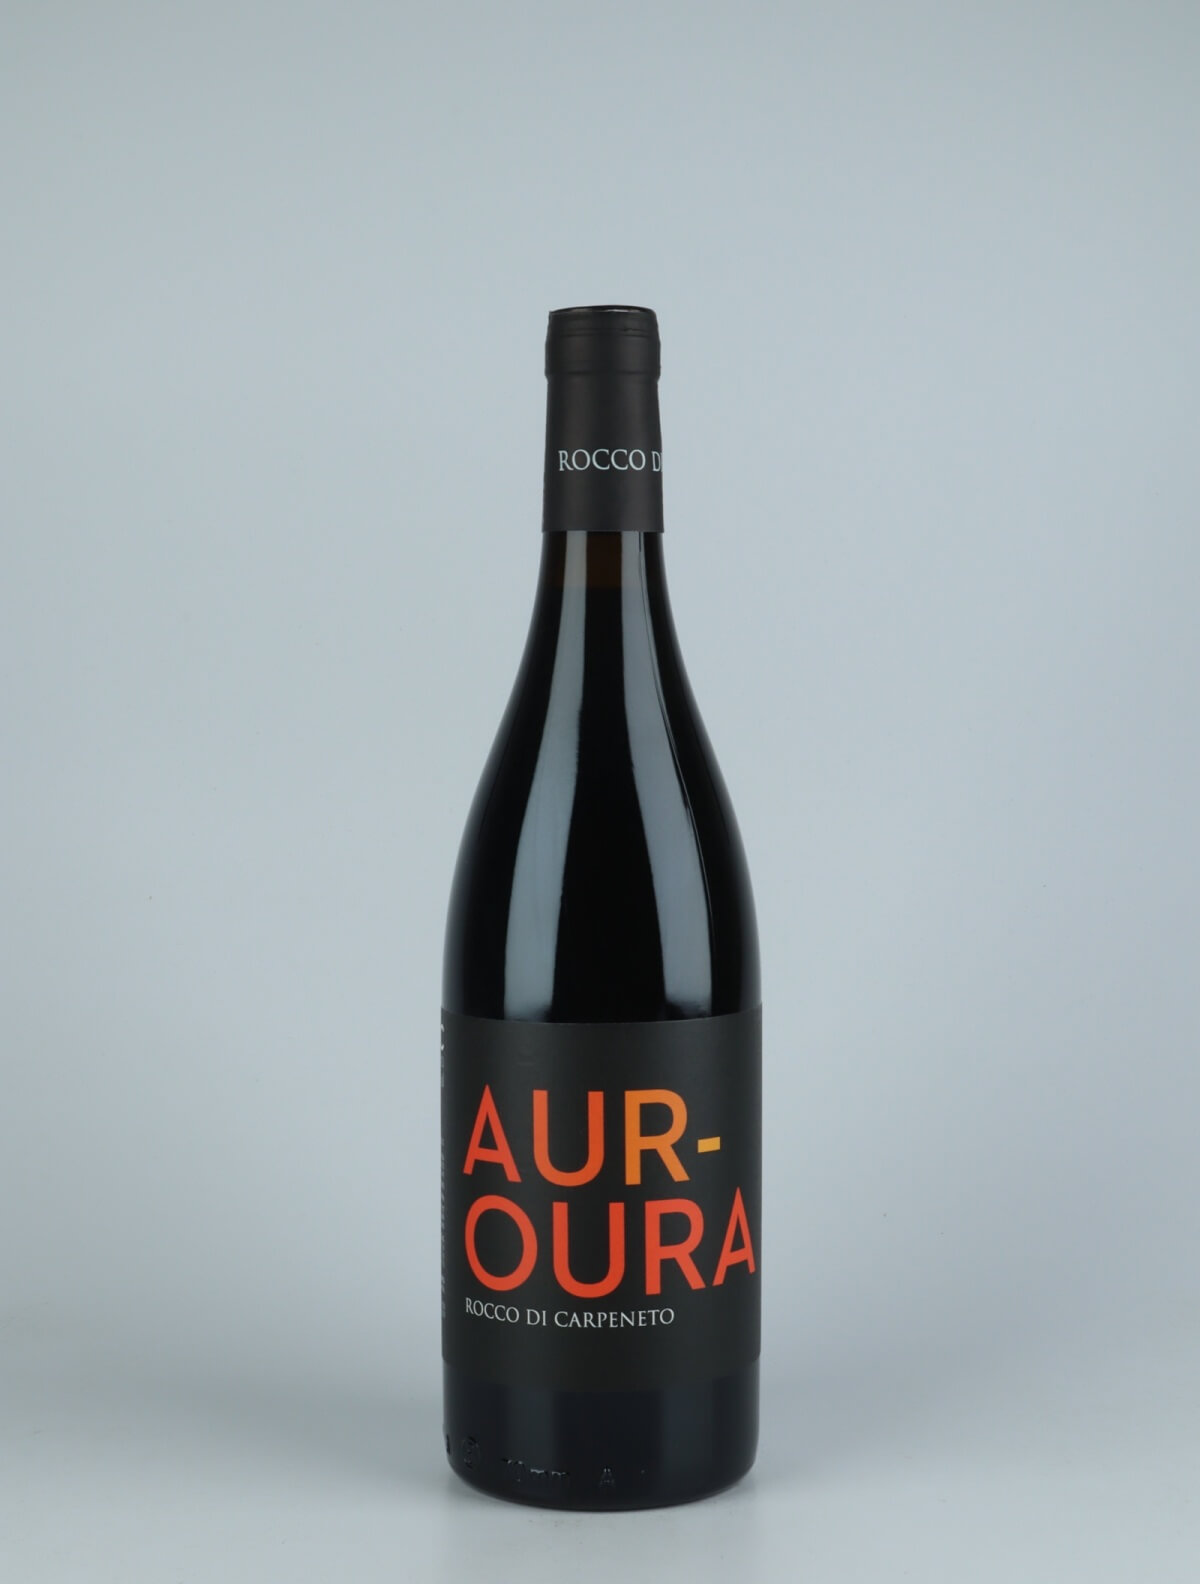 En flaske 2020 Aur-Oura Rødvin fra Rocco di Carpeneto, Piemonte i Italien